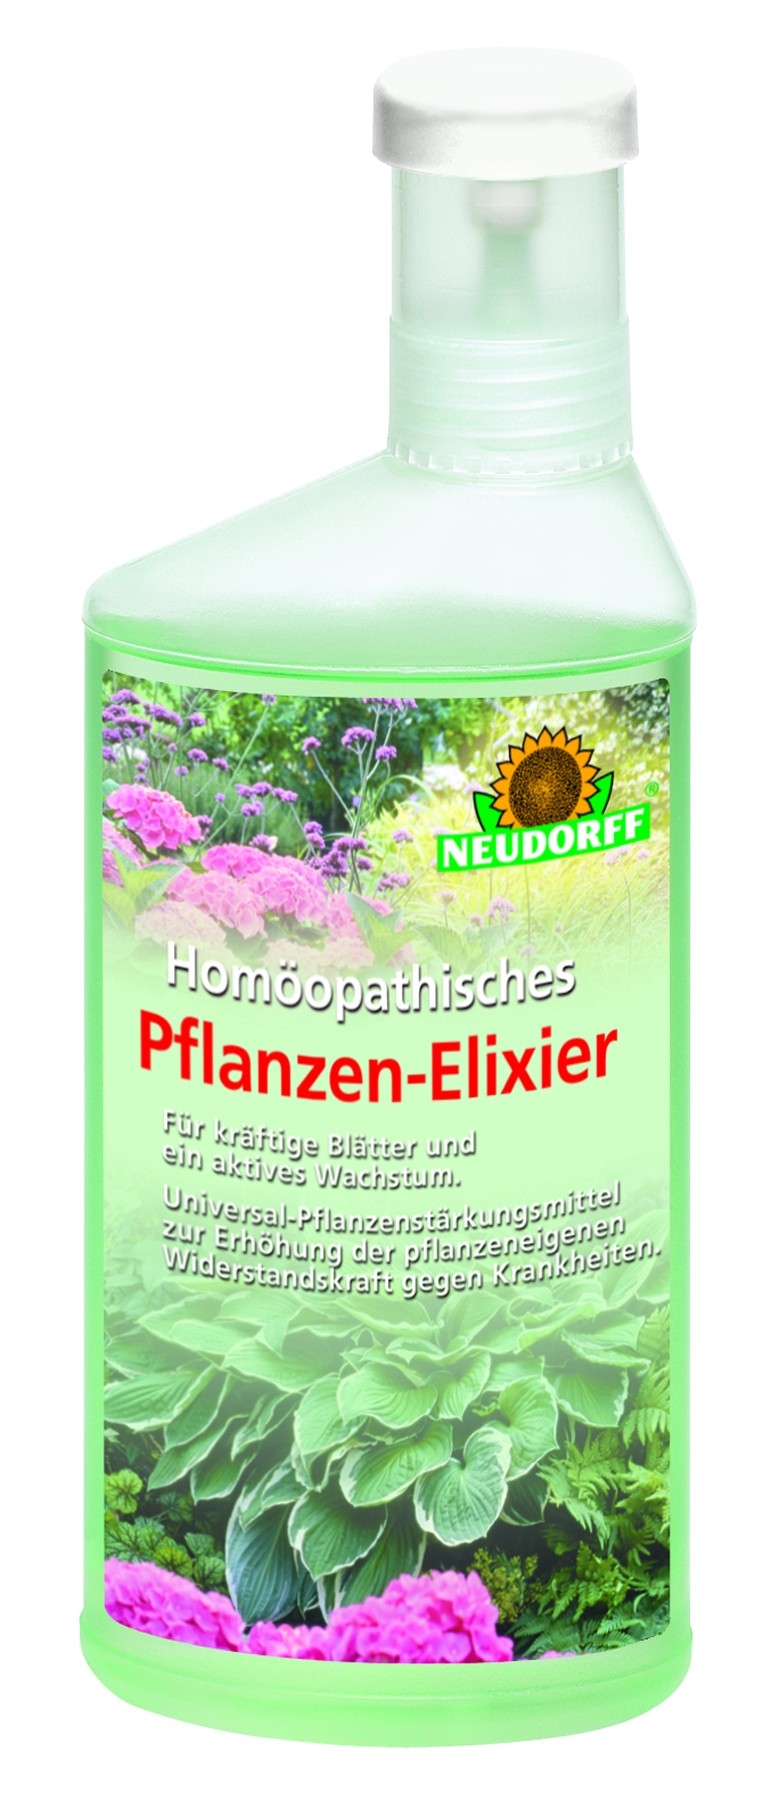 Neudorff Pflanzen-Elixier